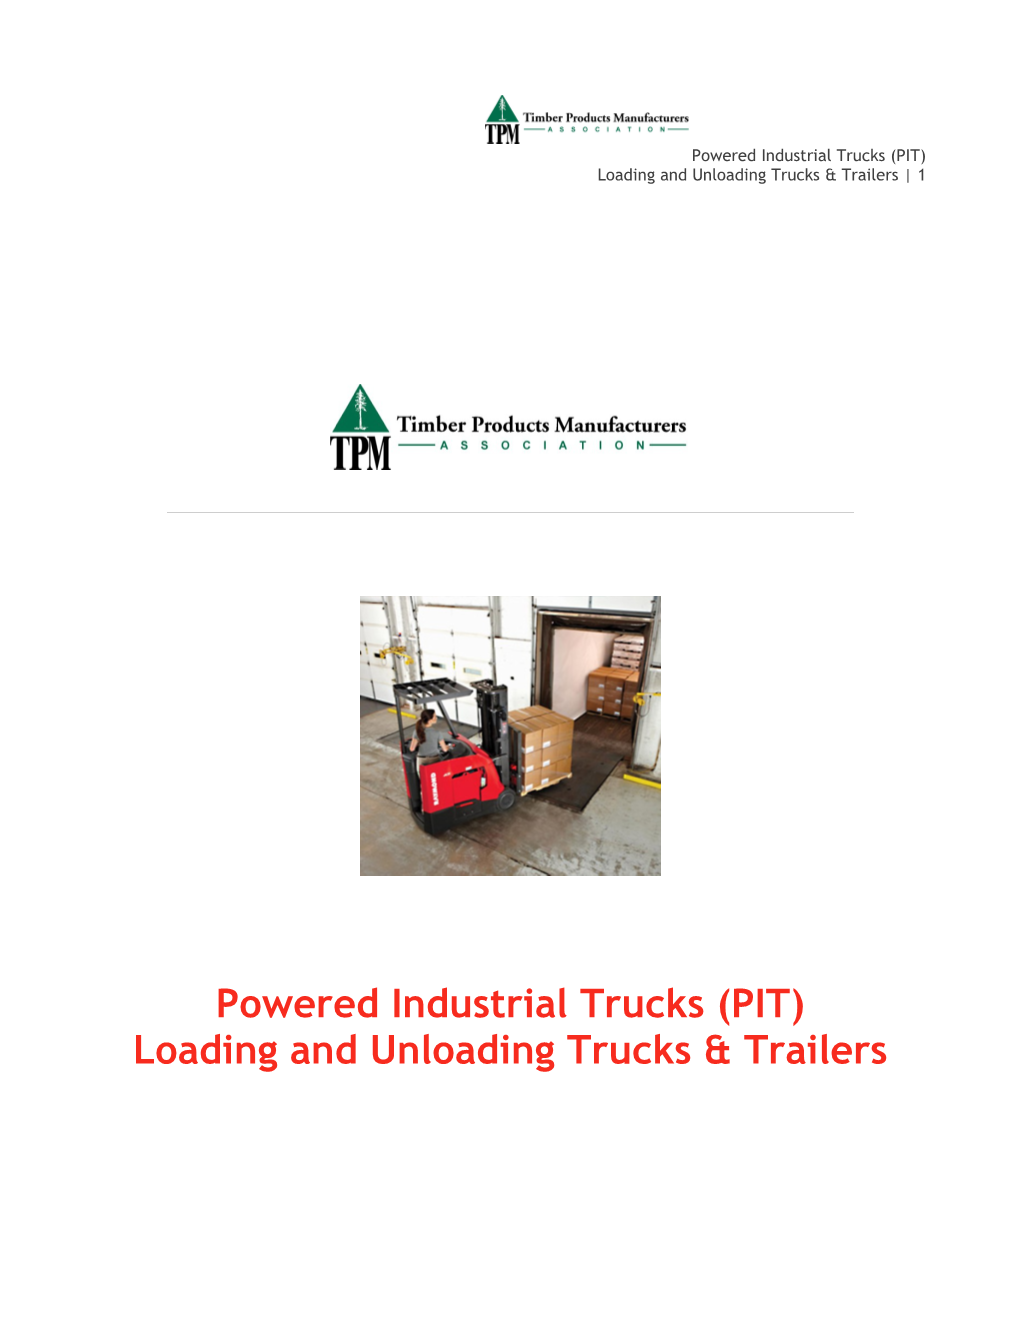 PIT Loading & Unloading Trucks & Trailers